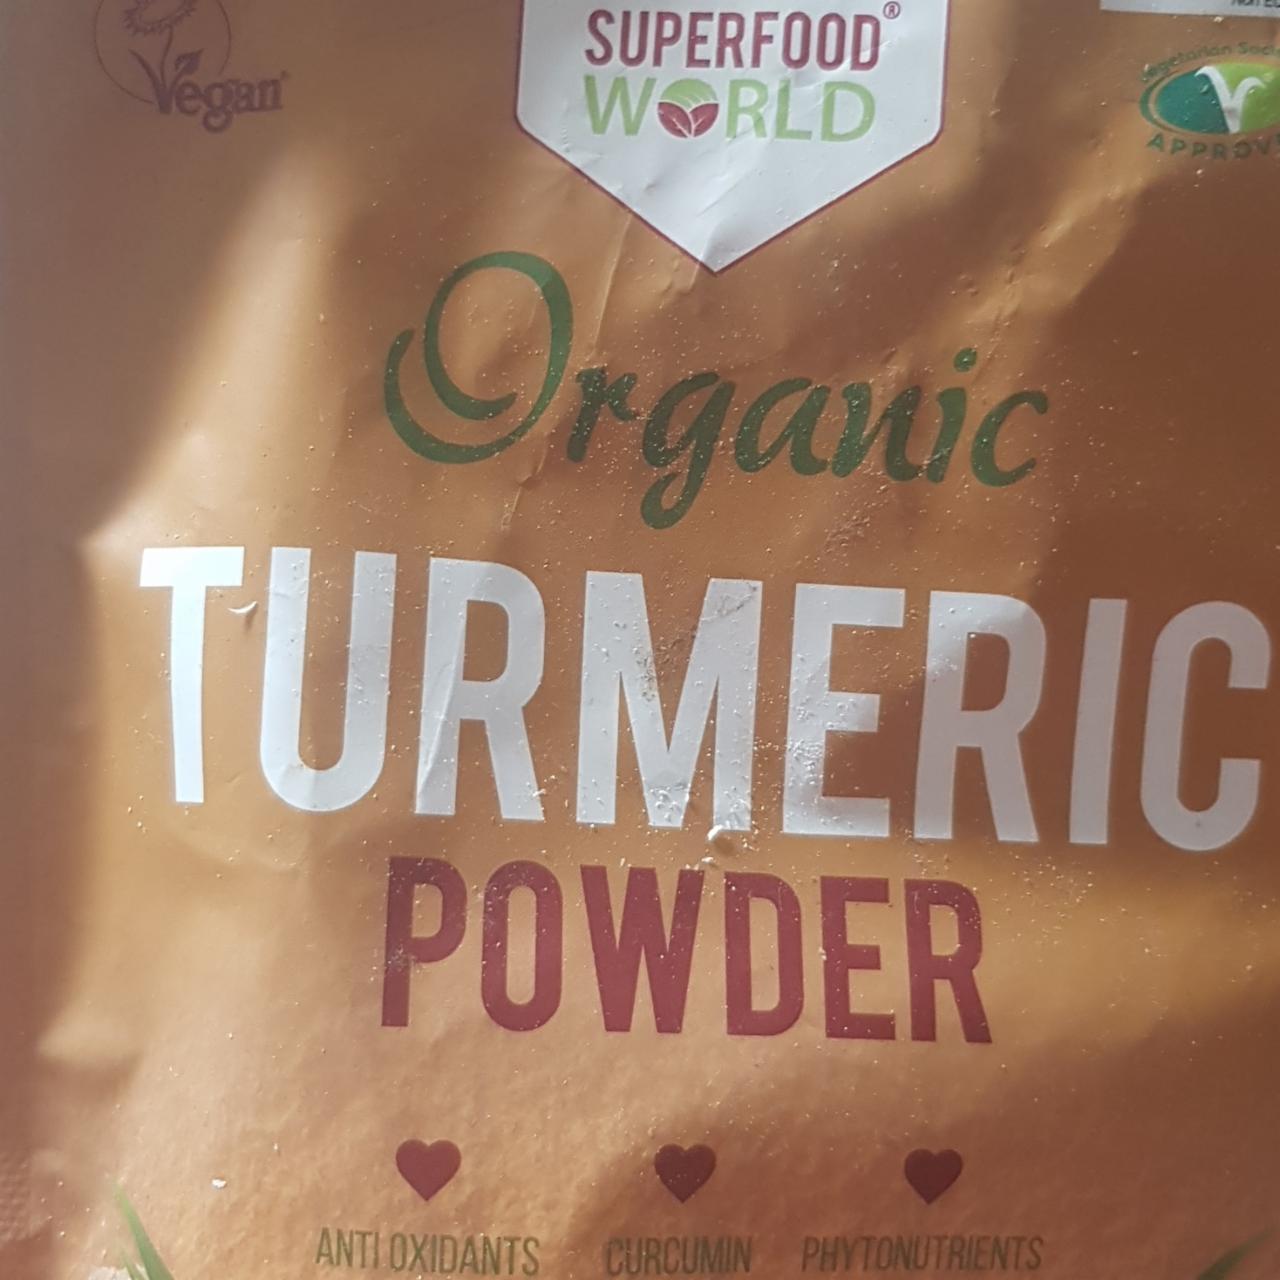 Fotografie - Turmeric Powder Superfood World